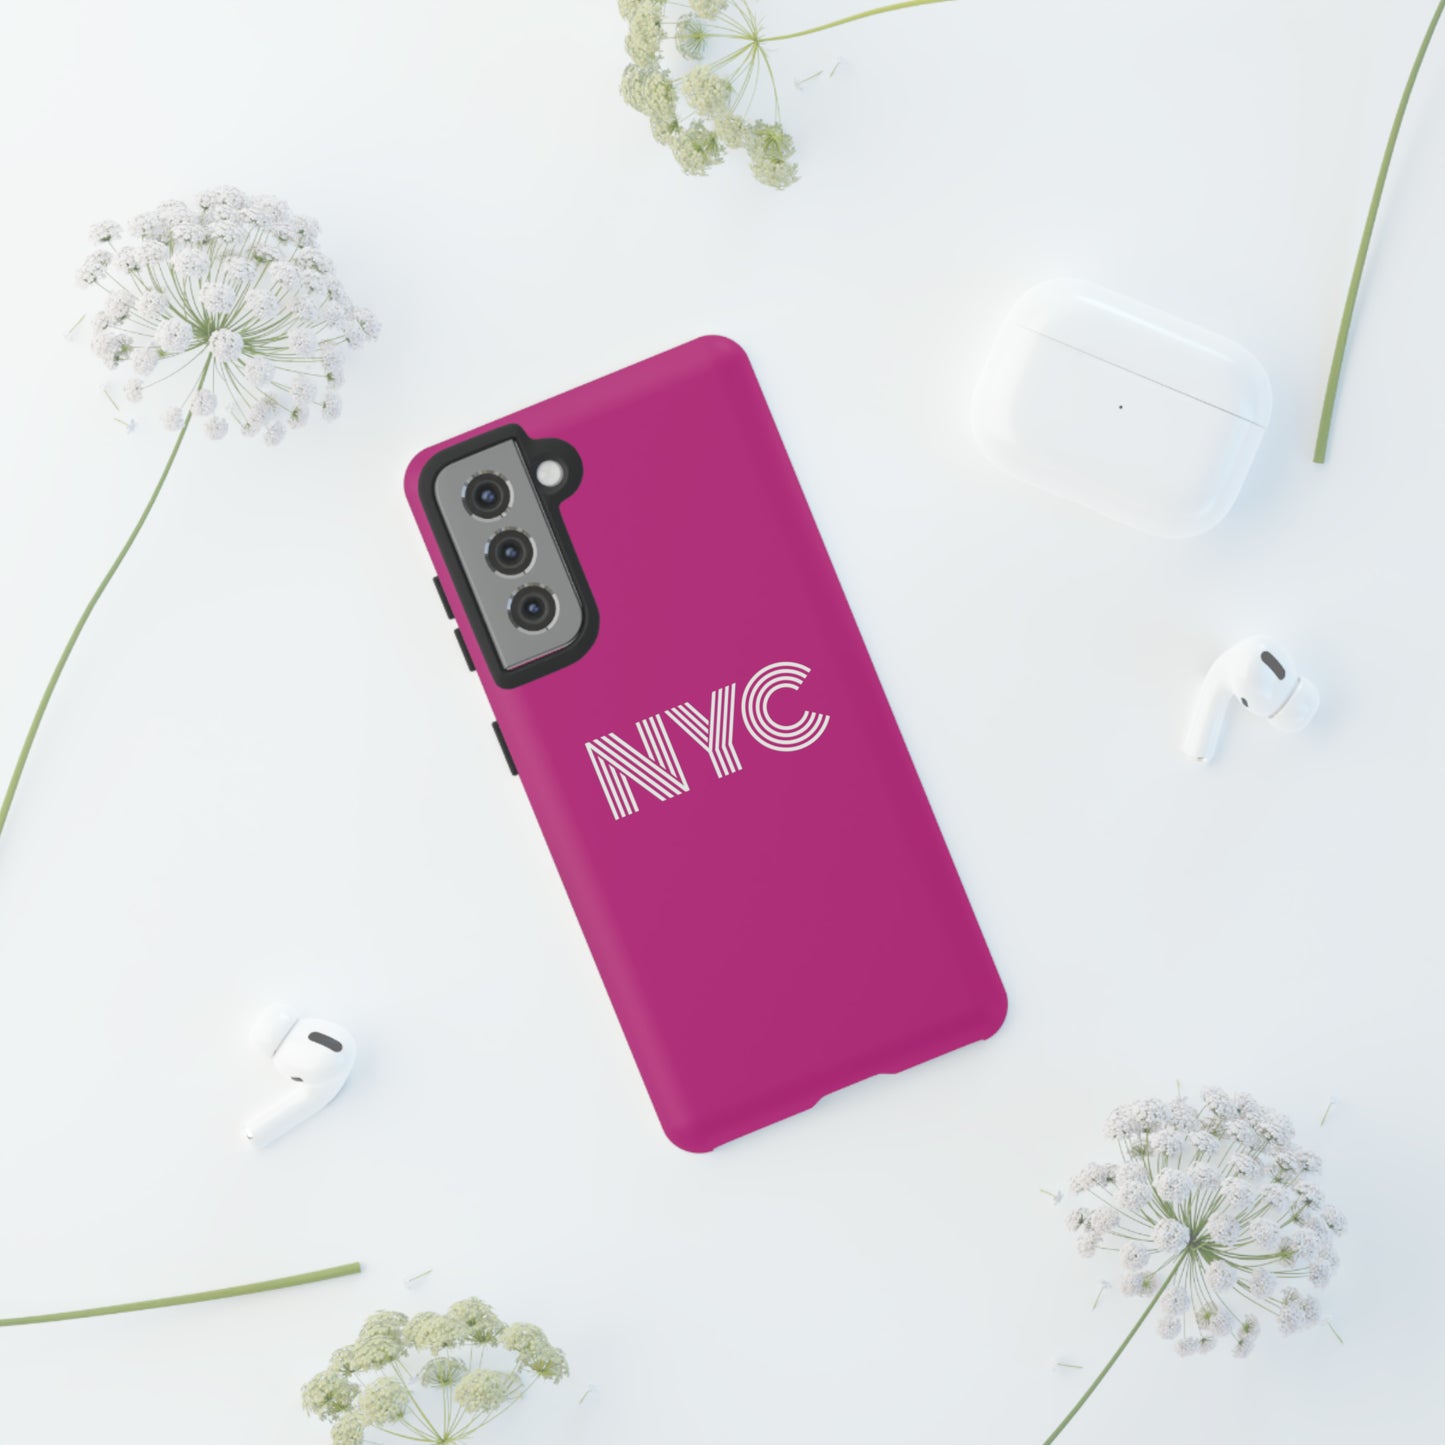 NYC Tough Phone Case, Pink